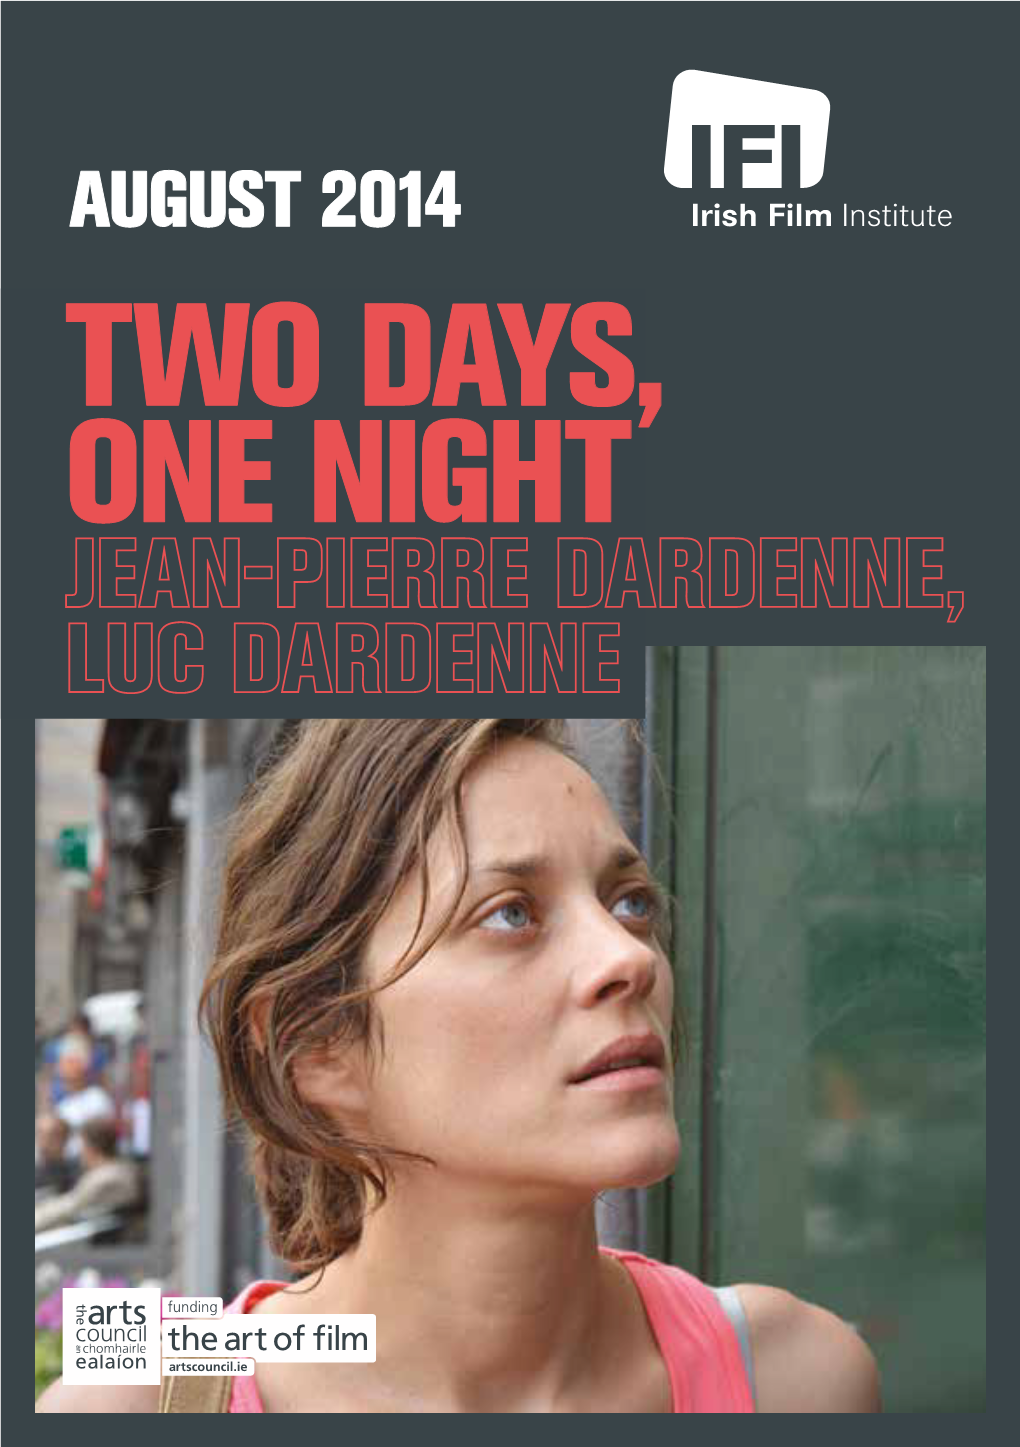 August 2014 Two Days, One Night the Irish Film Institute